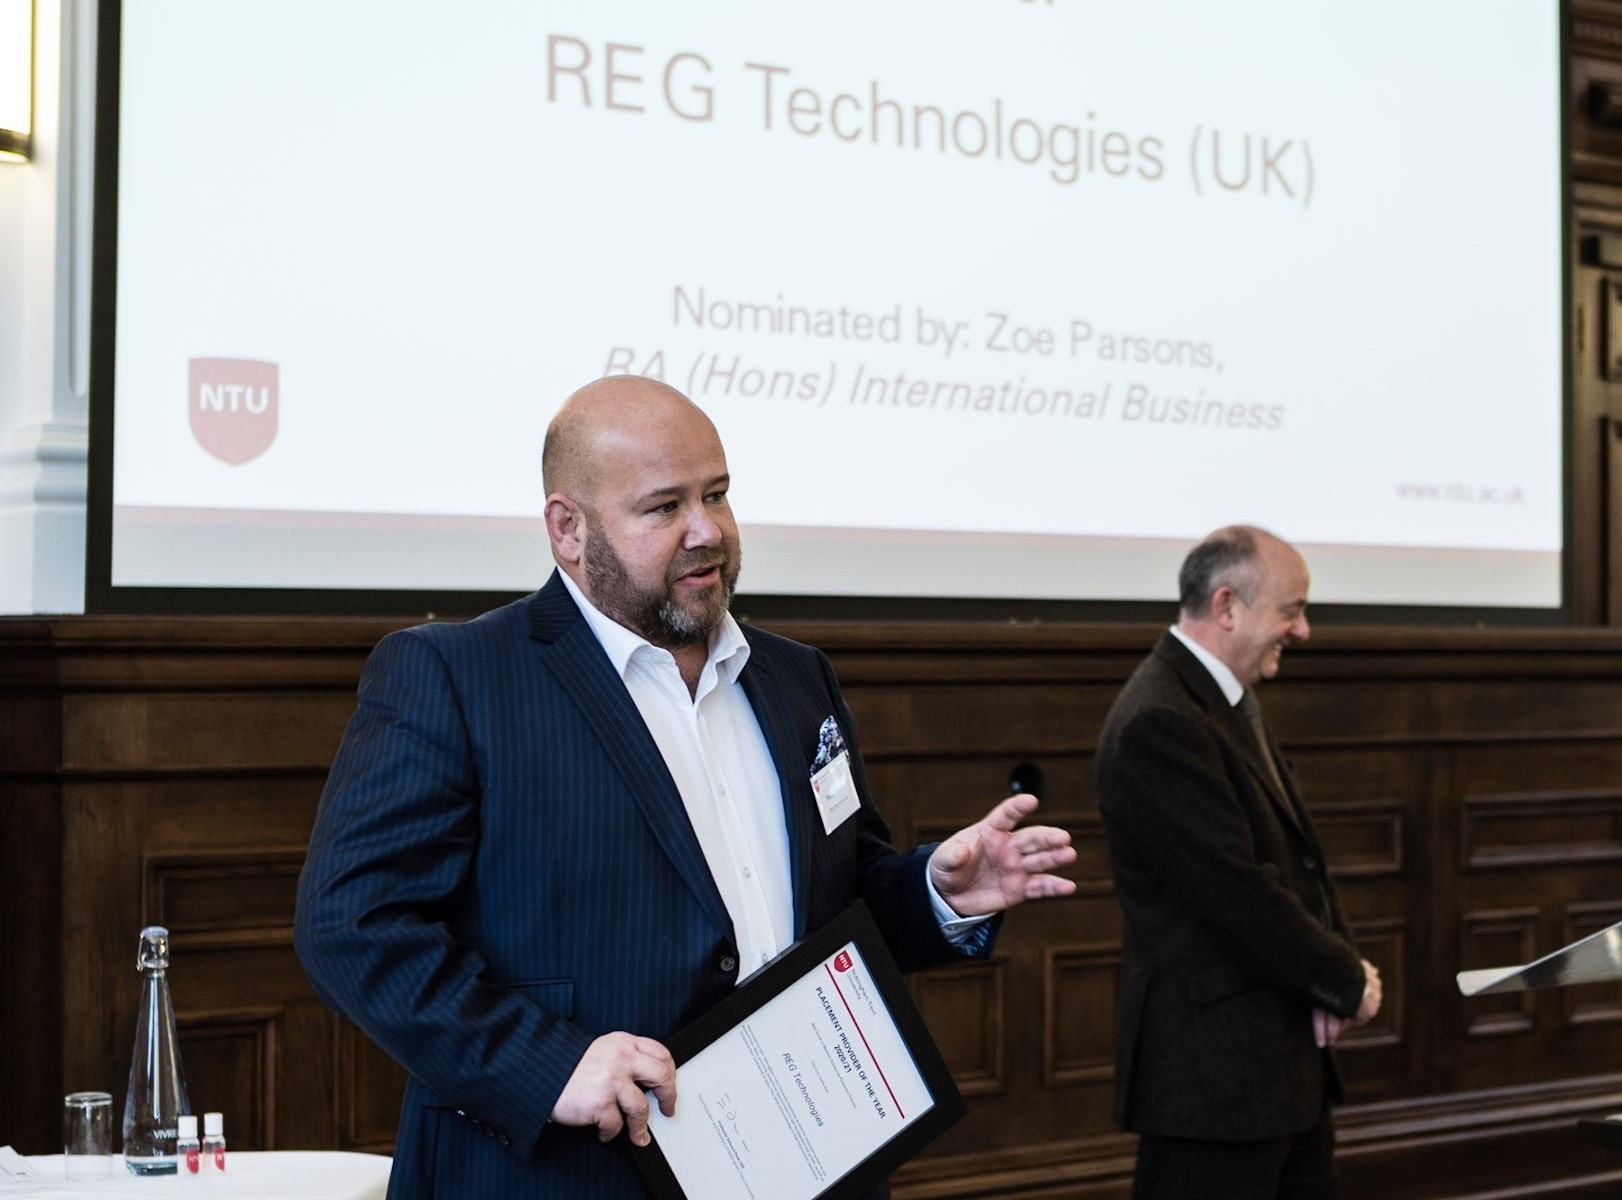 Paul Tasker accepting award for REG Technologies (UK)